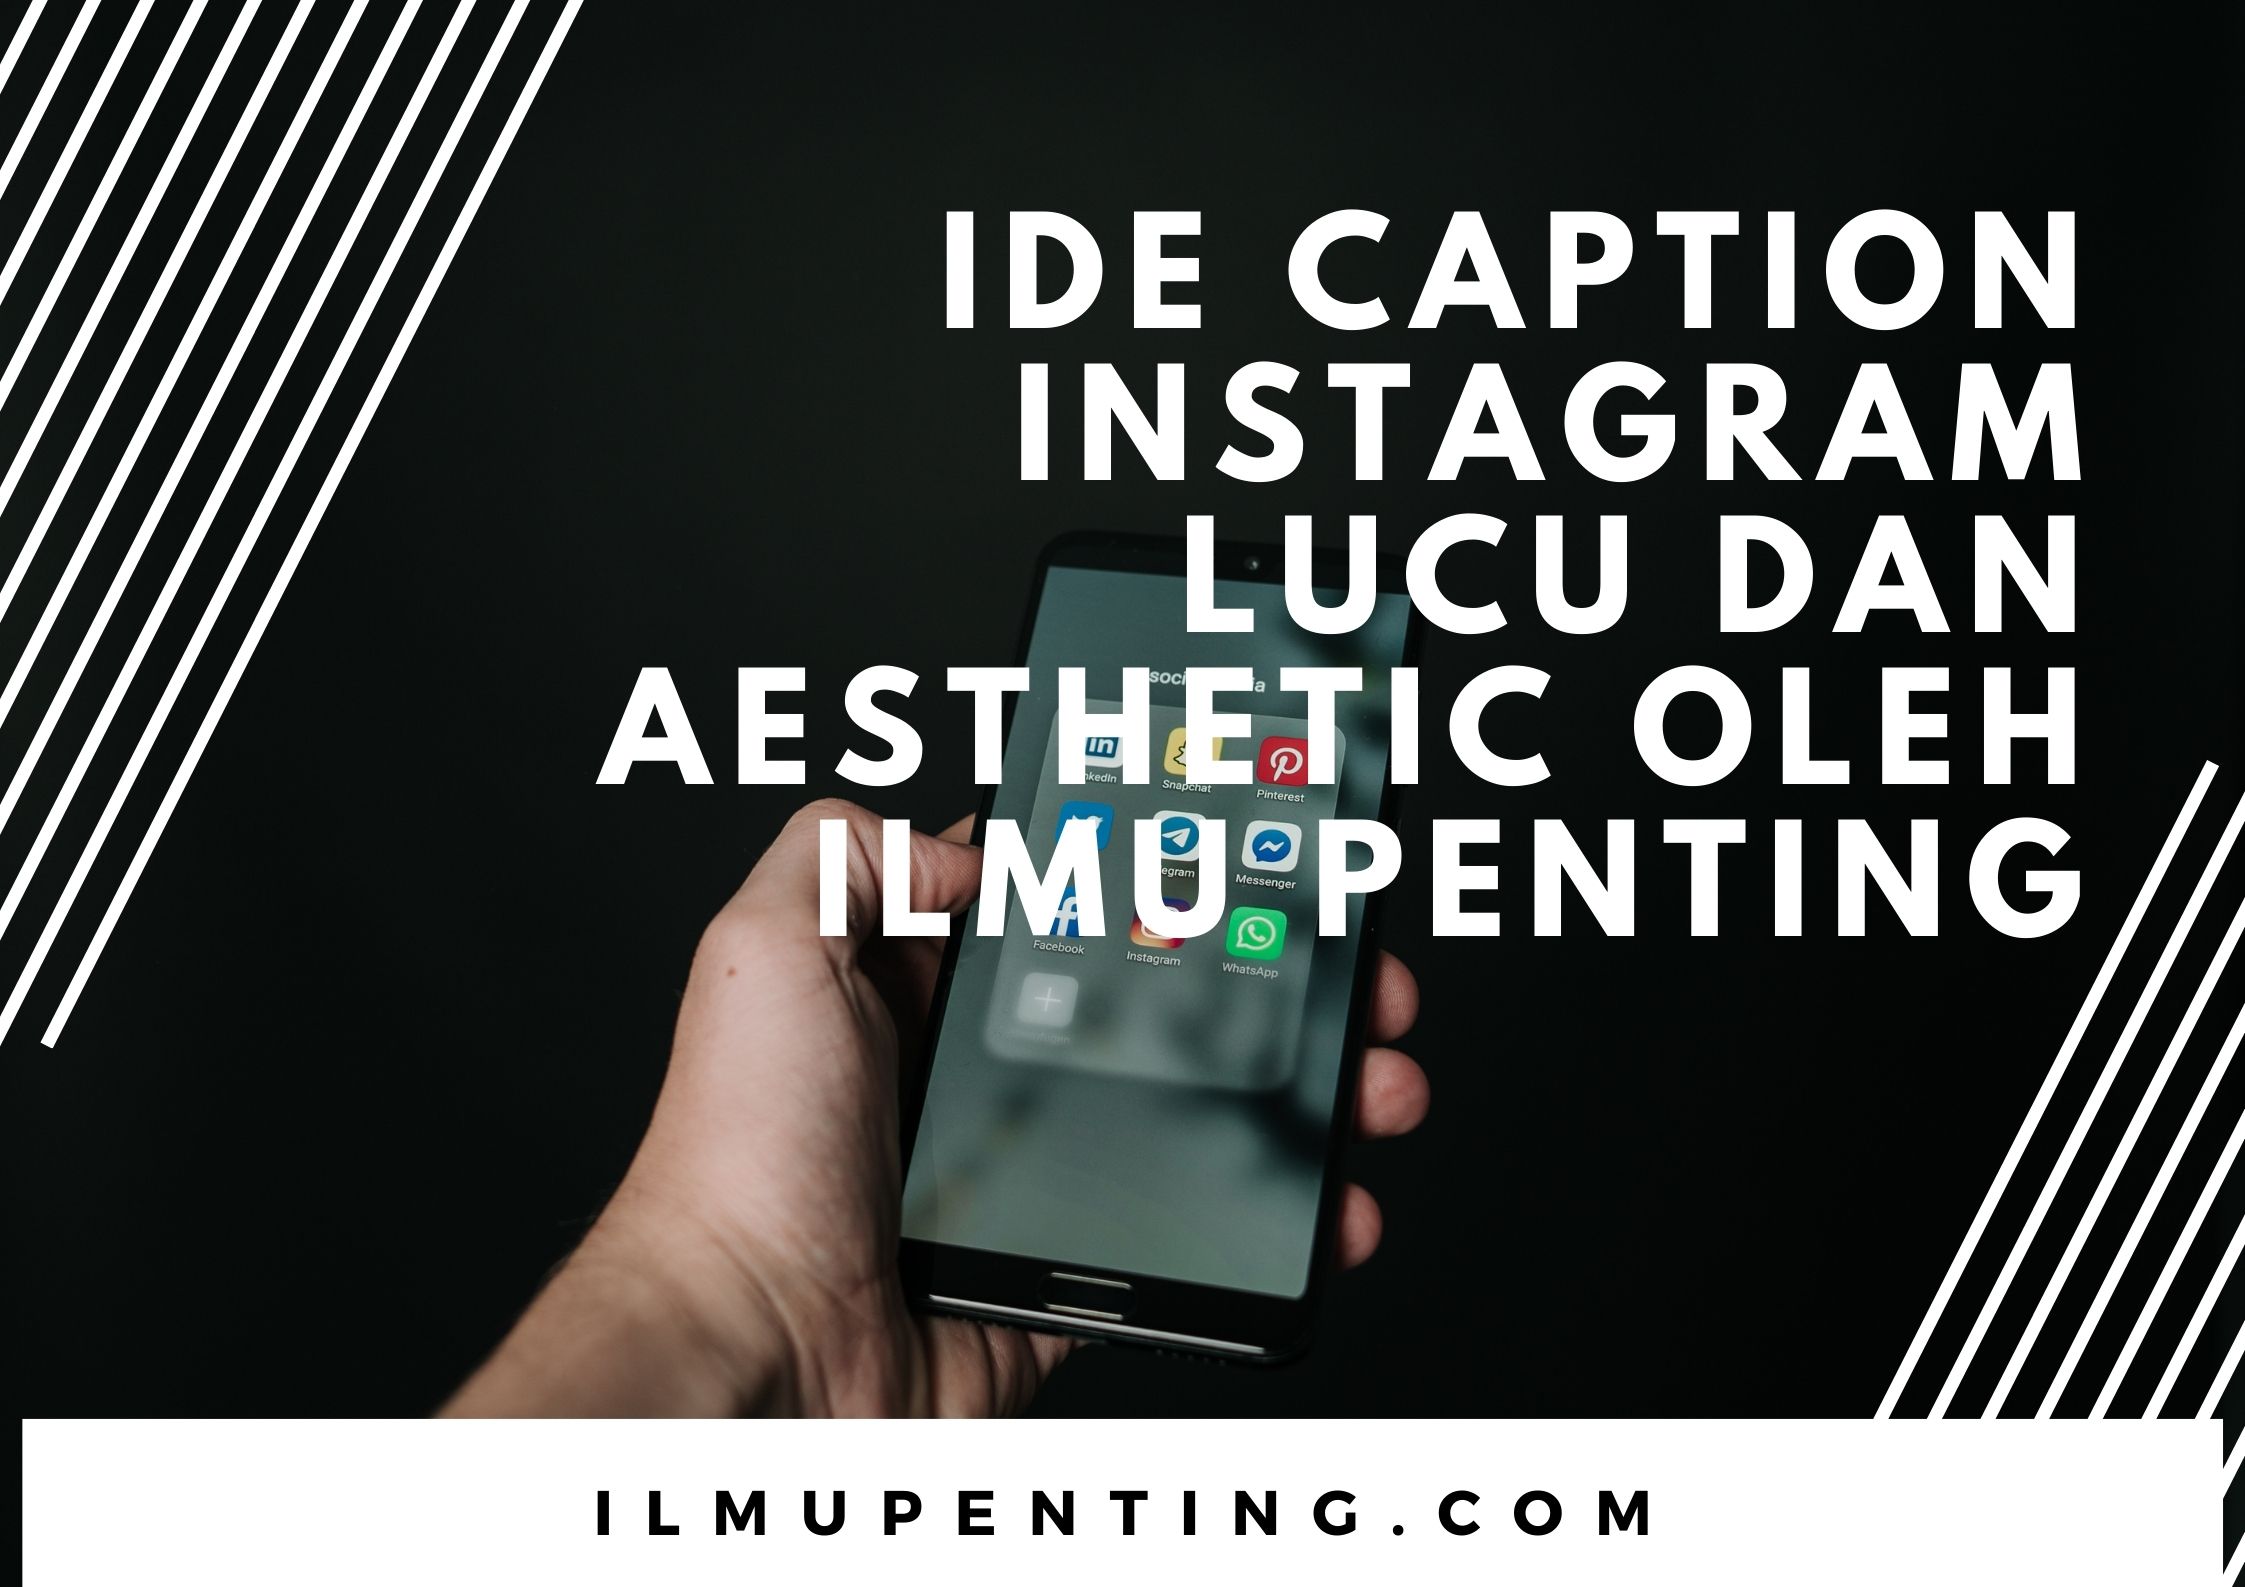 Ide Caption Instagram Lucu dan Aesthetic Oleh Ilmu Penting